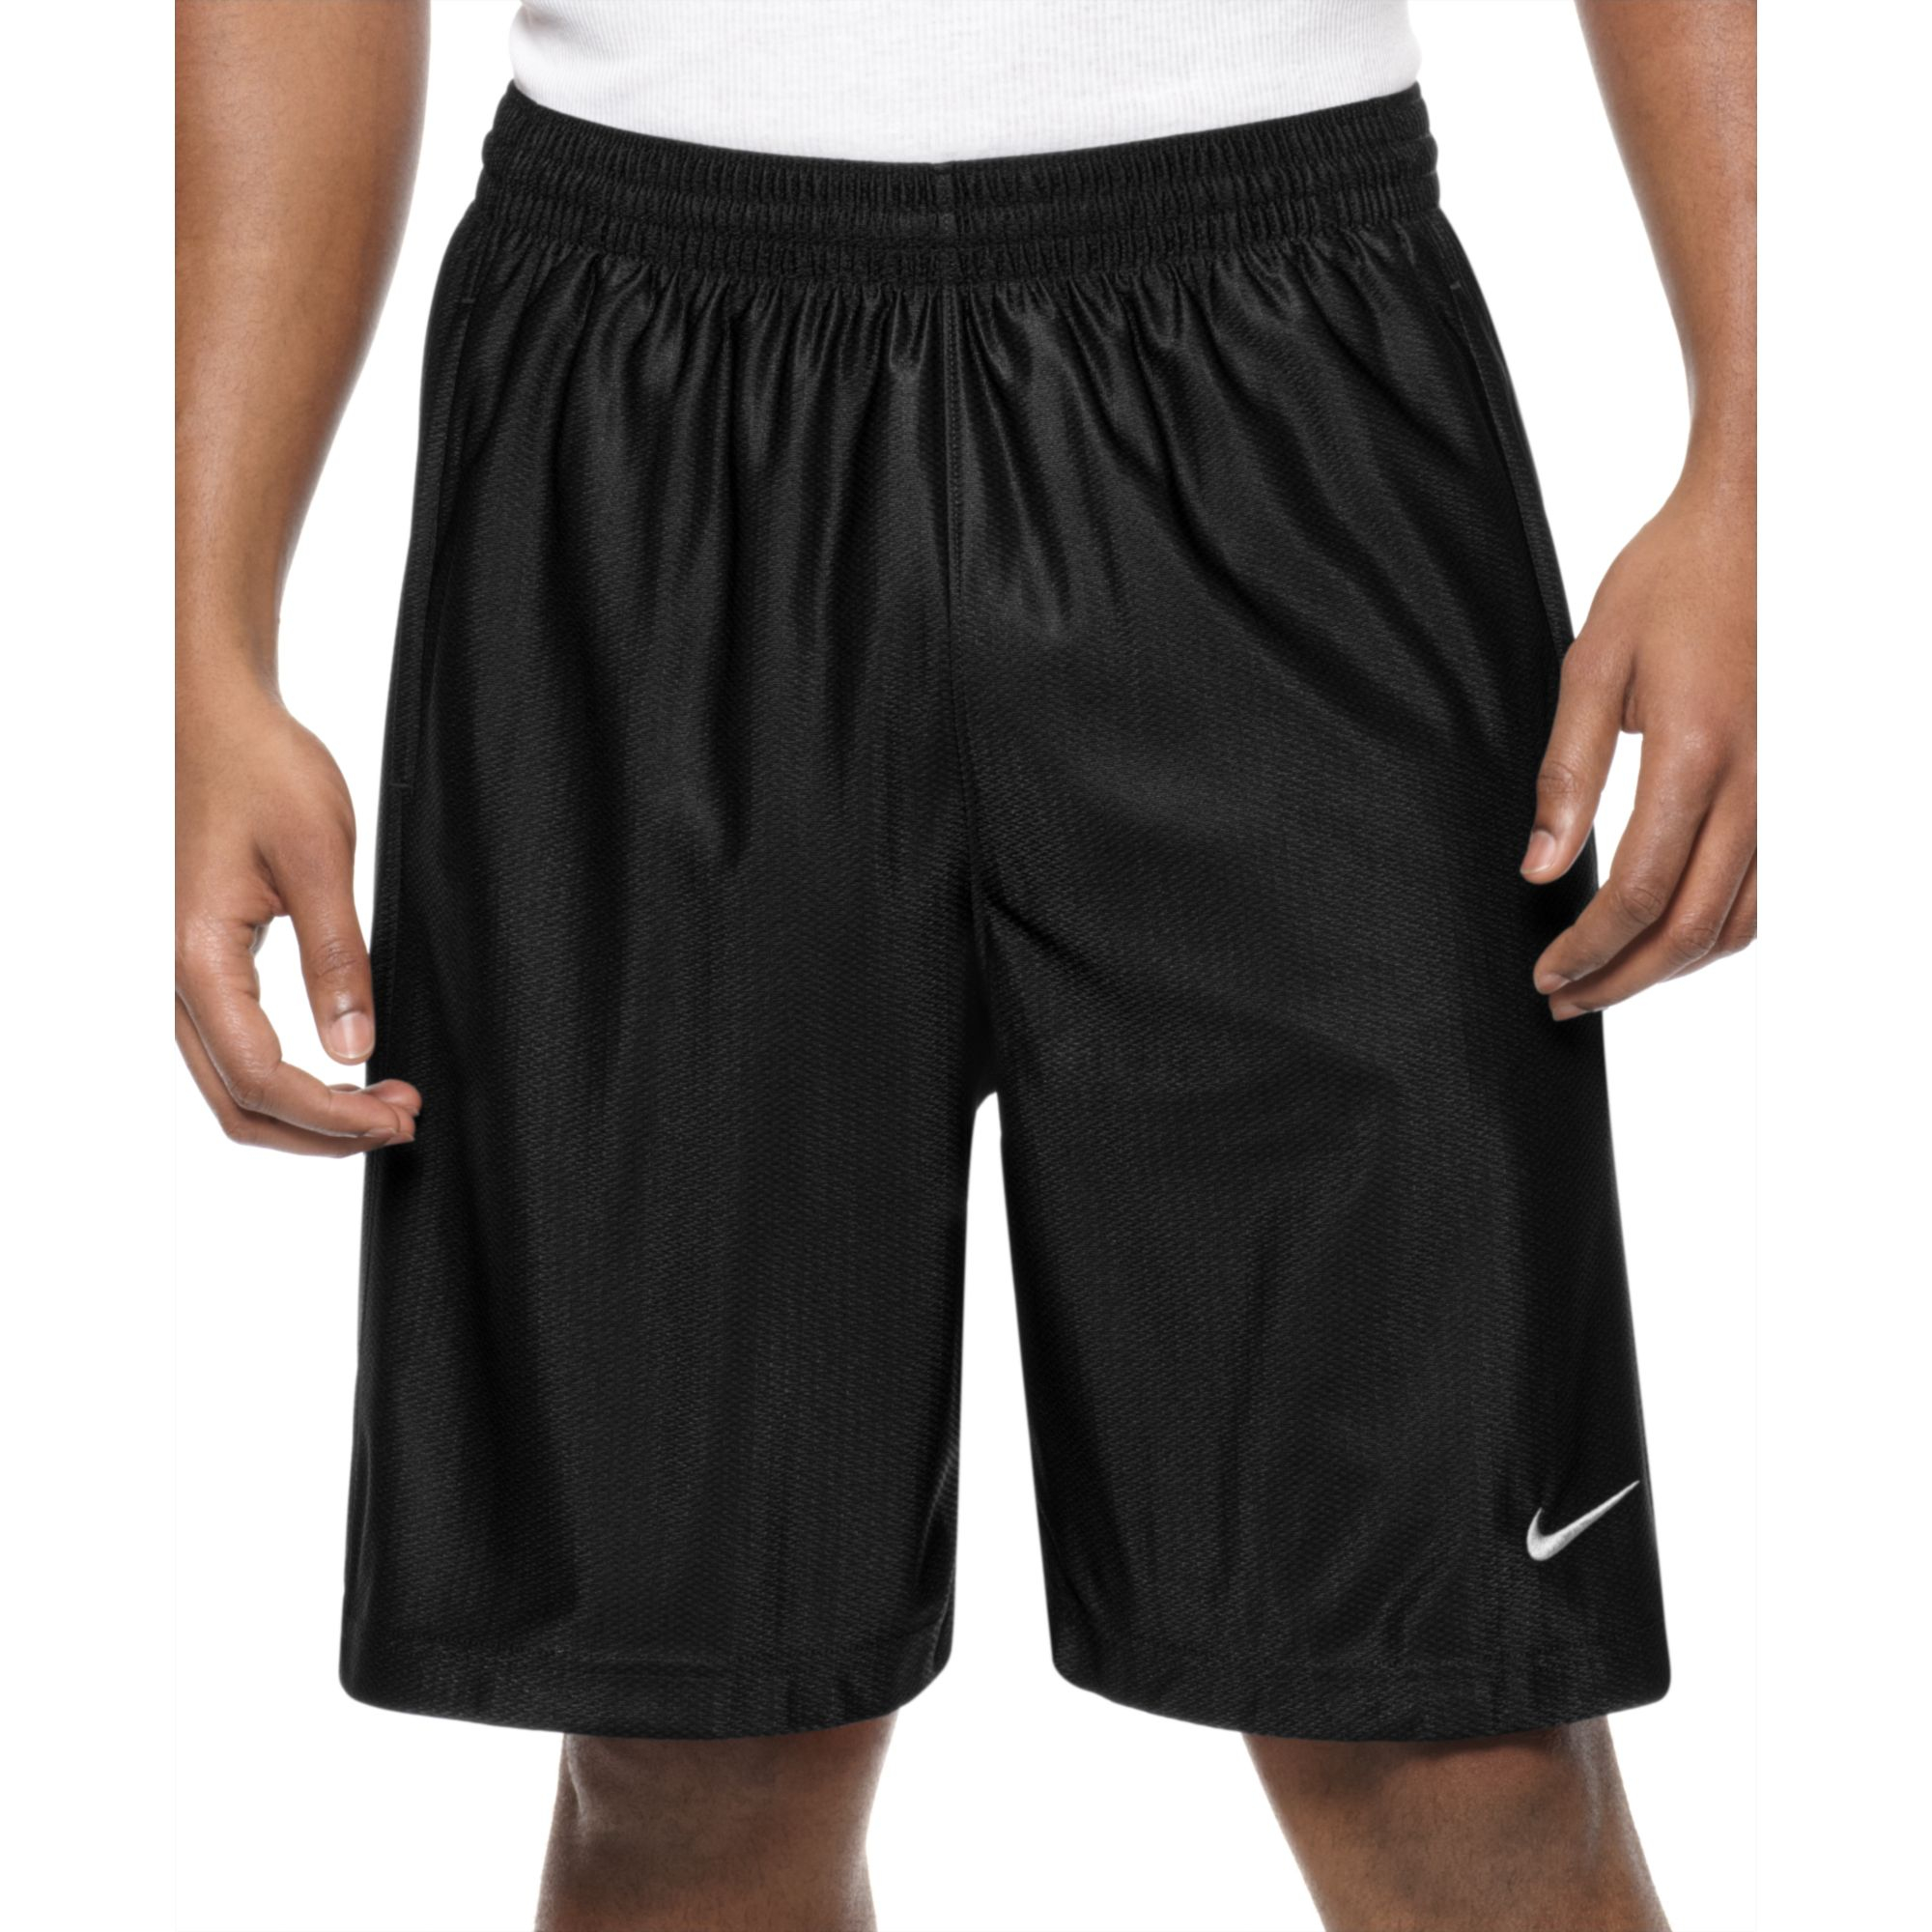 Nike Zone Mesh Basketball Shorts in 